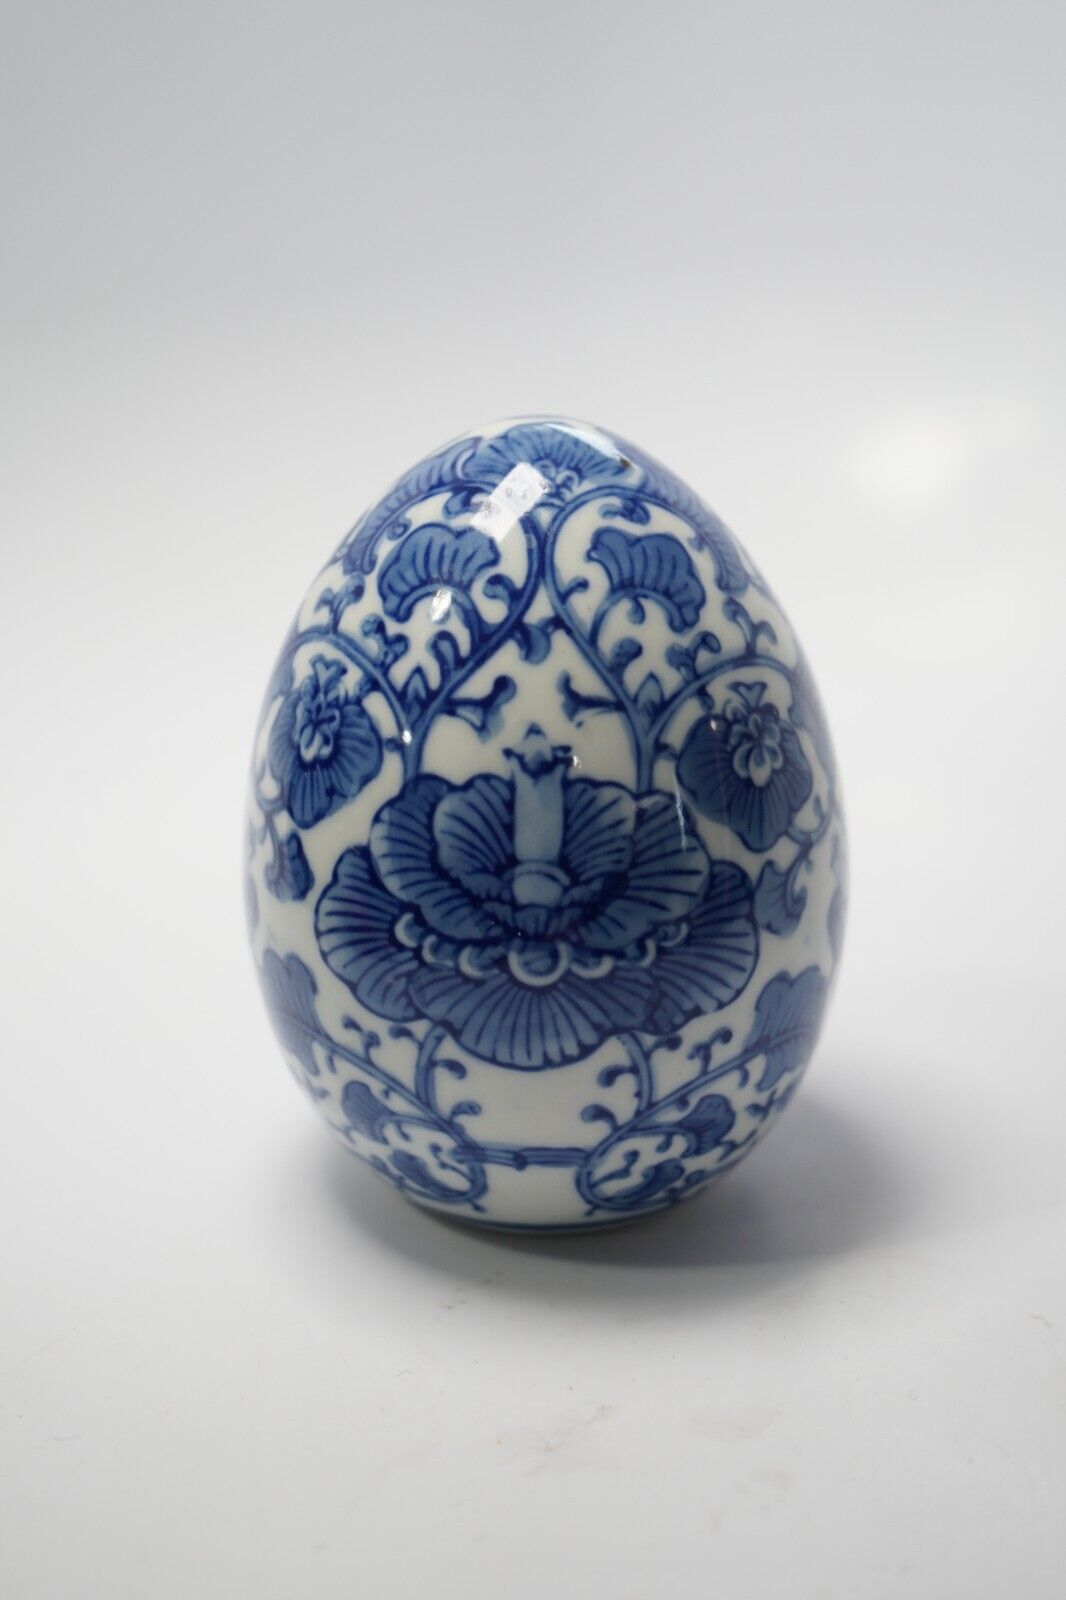 Blue & White Decorative Egg Ceramic Porcelain Decor Floral Design 4.5”Tall China